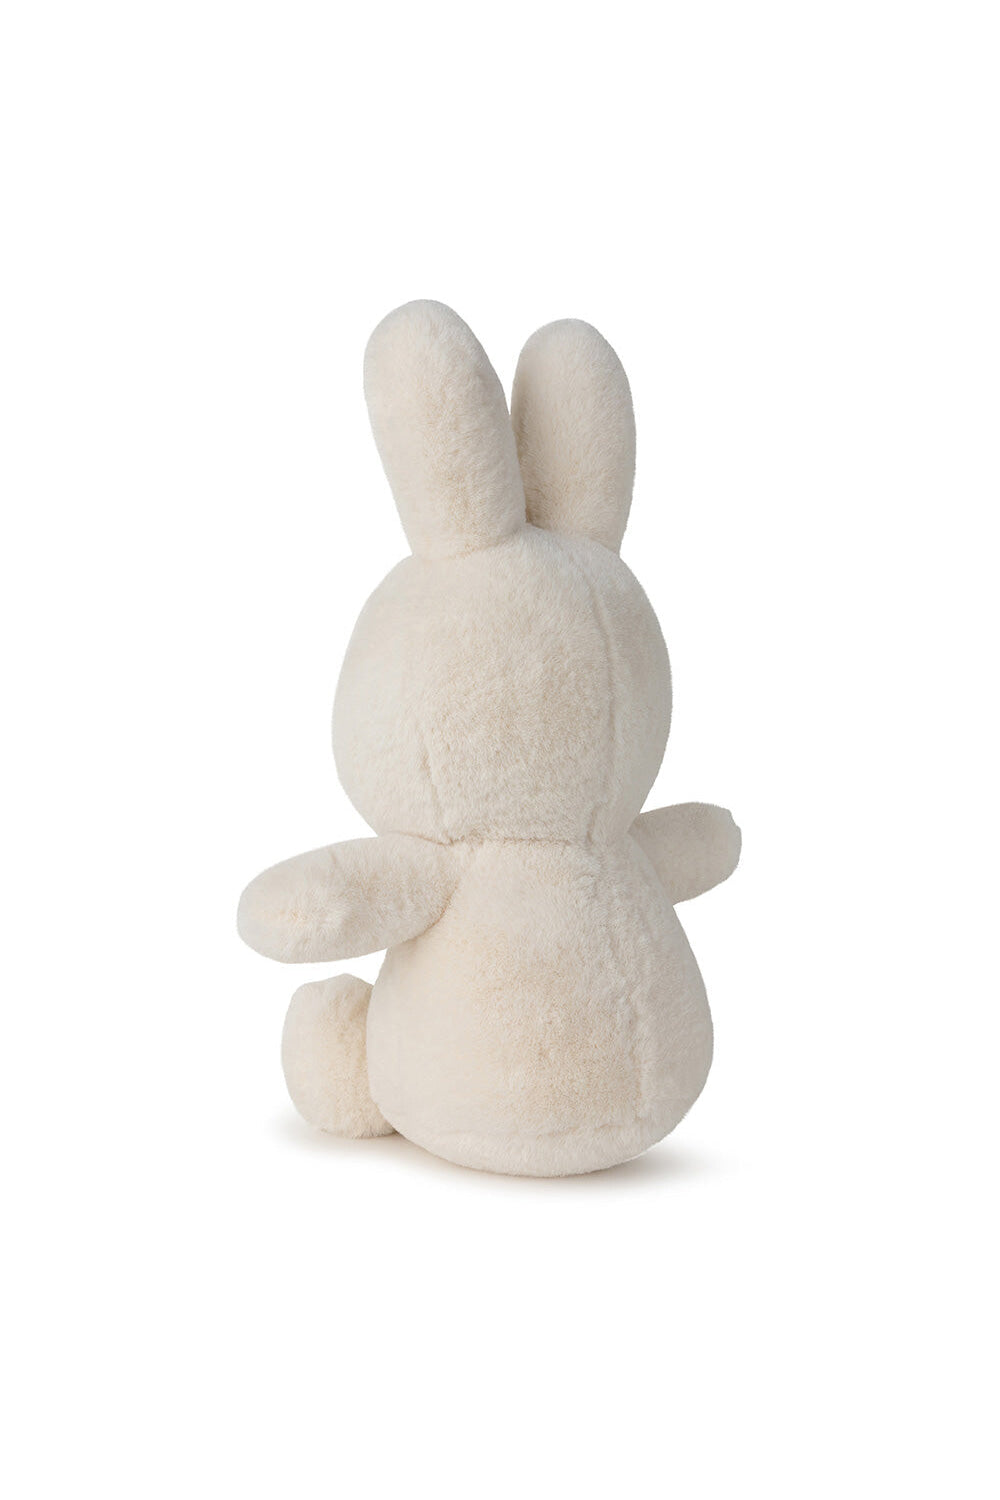 Miffy - Cozy Cream Sitting In Giftbox - 23cm